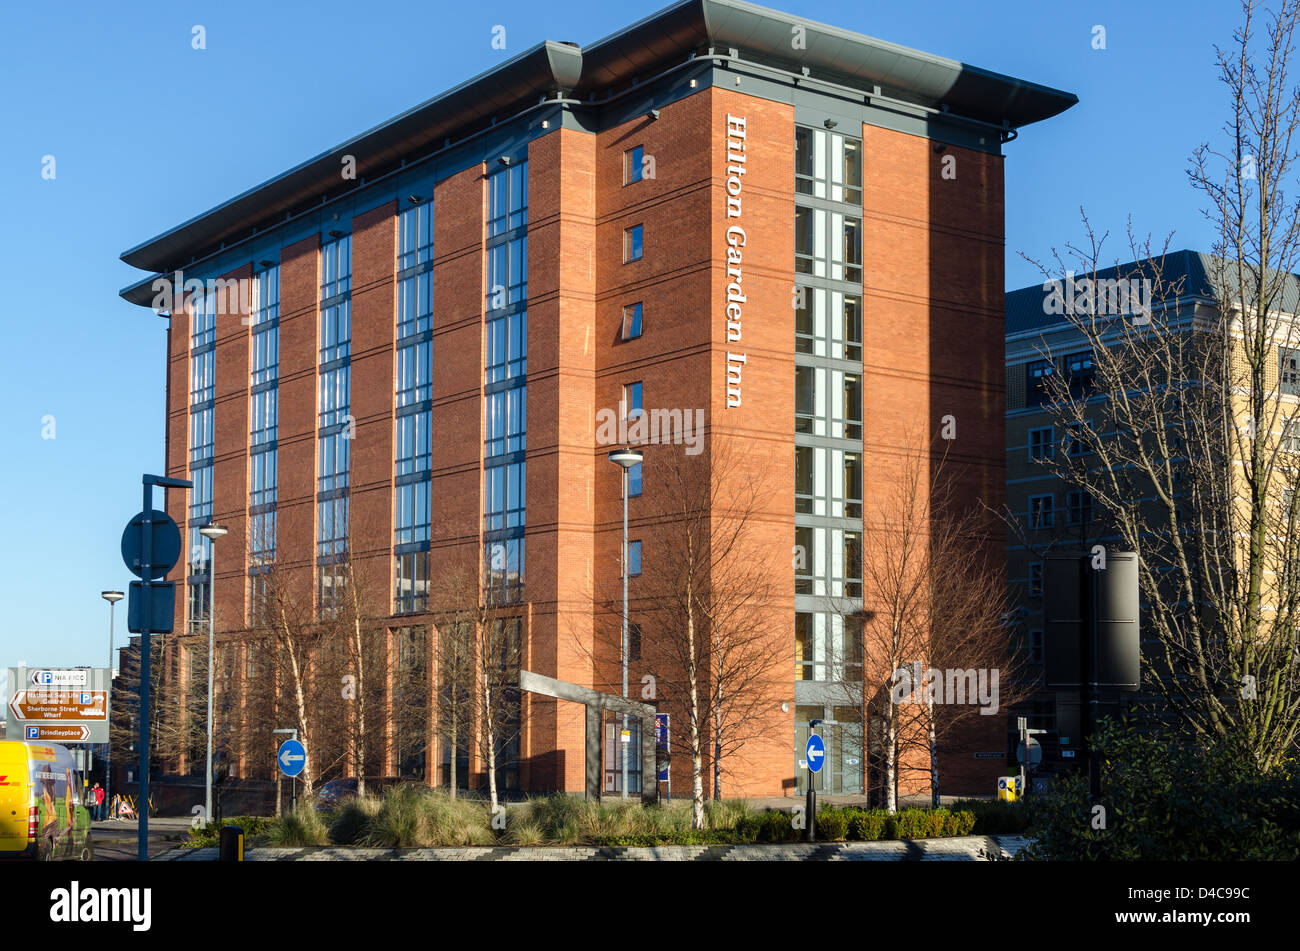 Hilton Garden Inn Hotels in Brindley Place, Birmingham Stockfoto